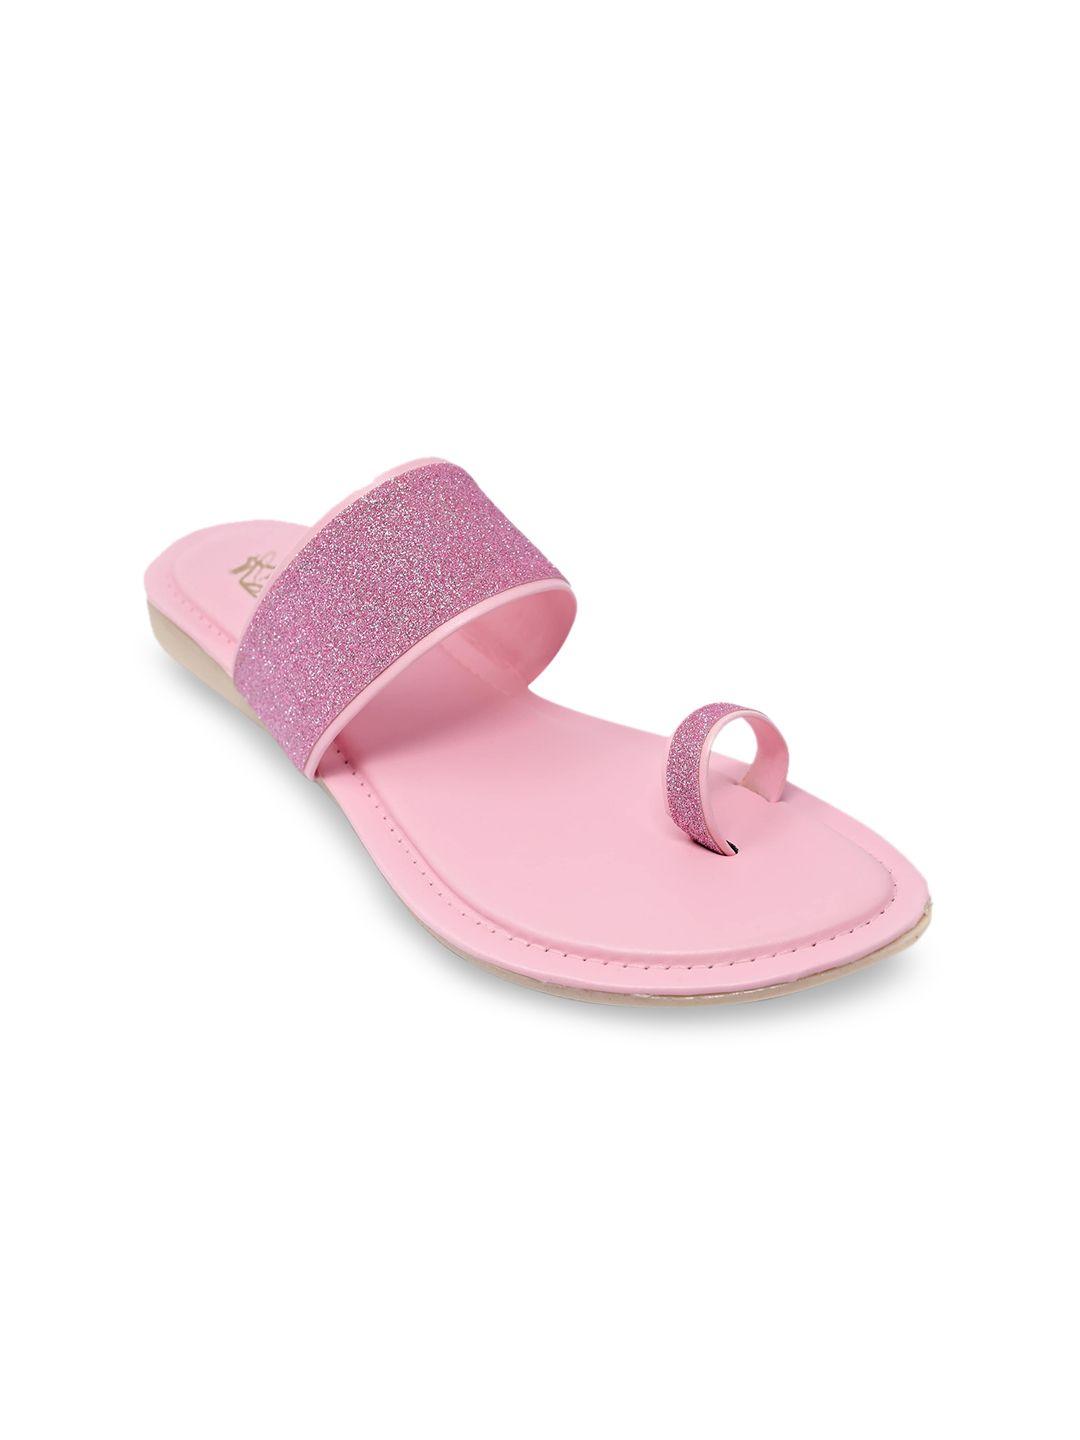 padvesh women pink embellished one toe flats